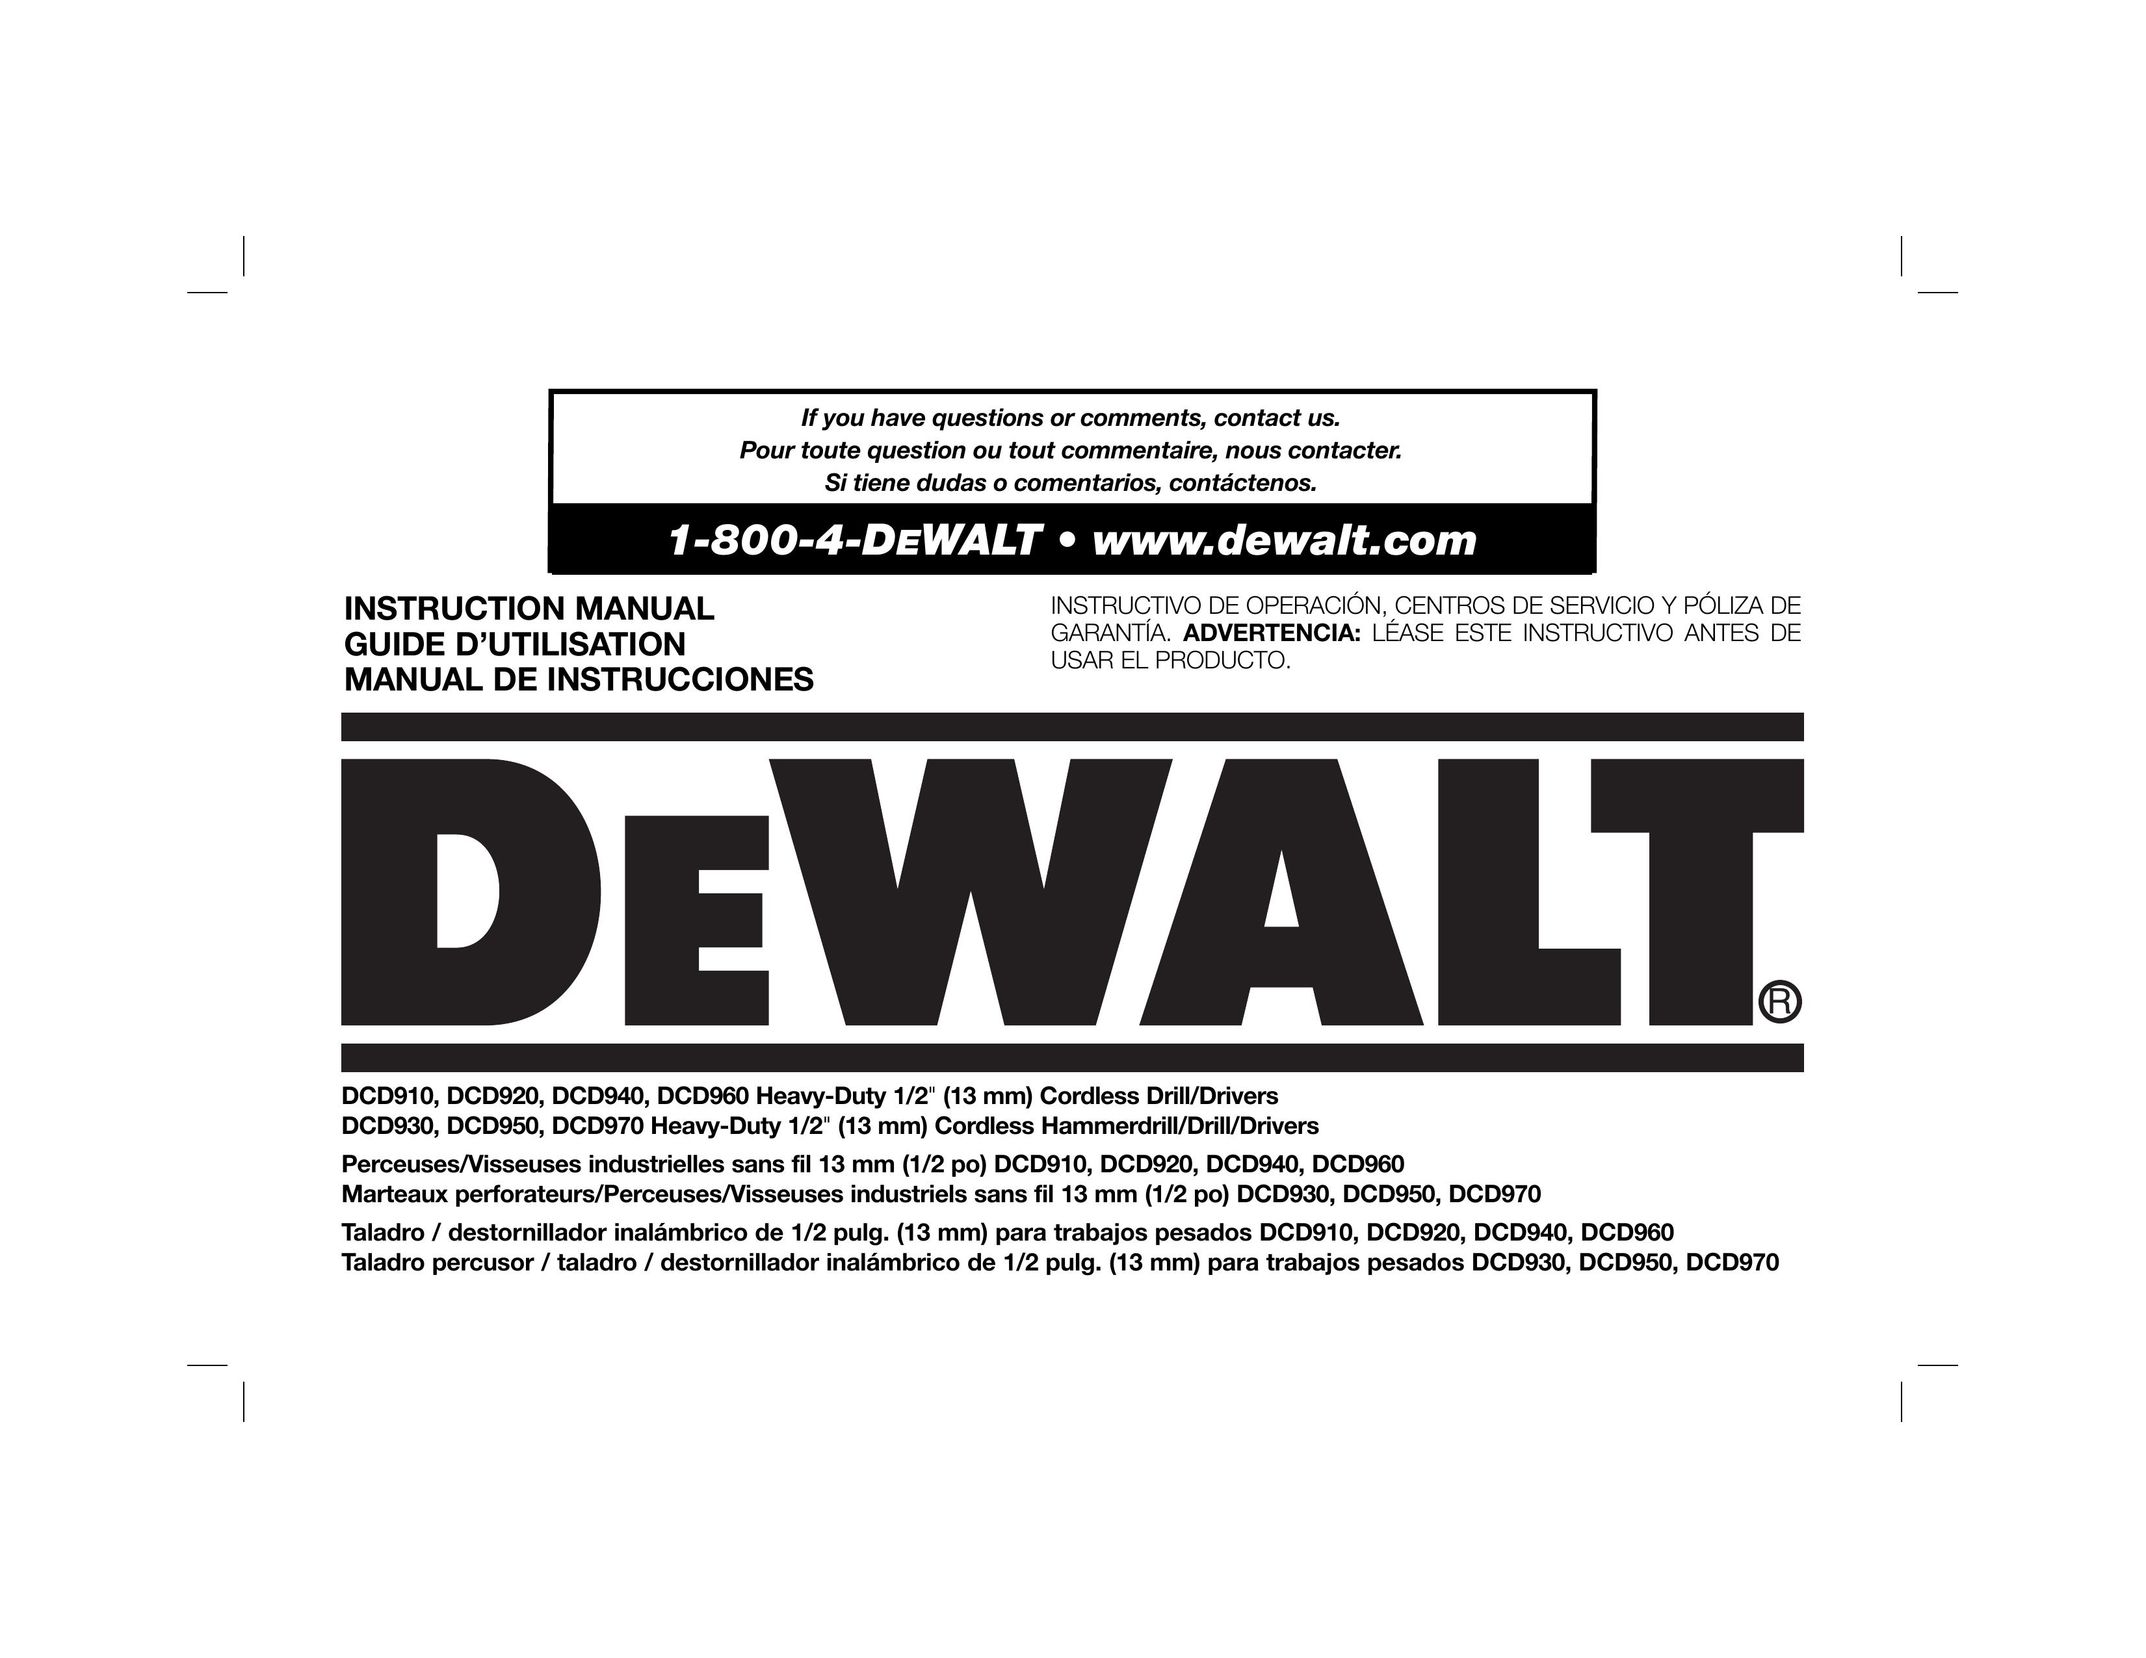 DeWalt DCD960 Cordless Drill User Manual